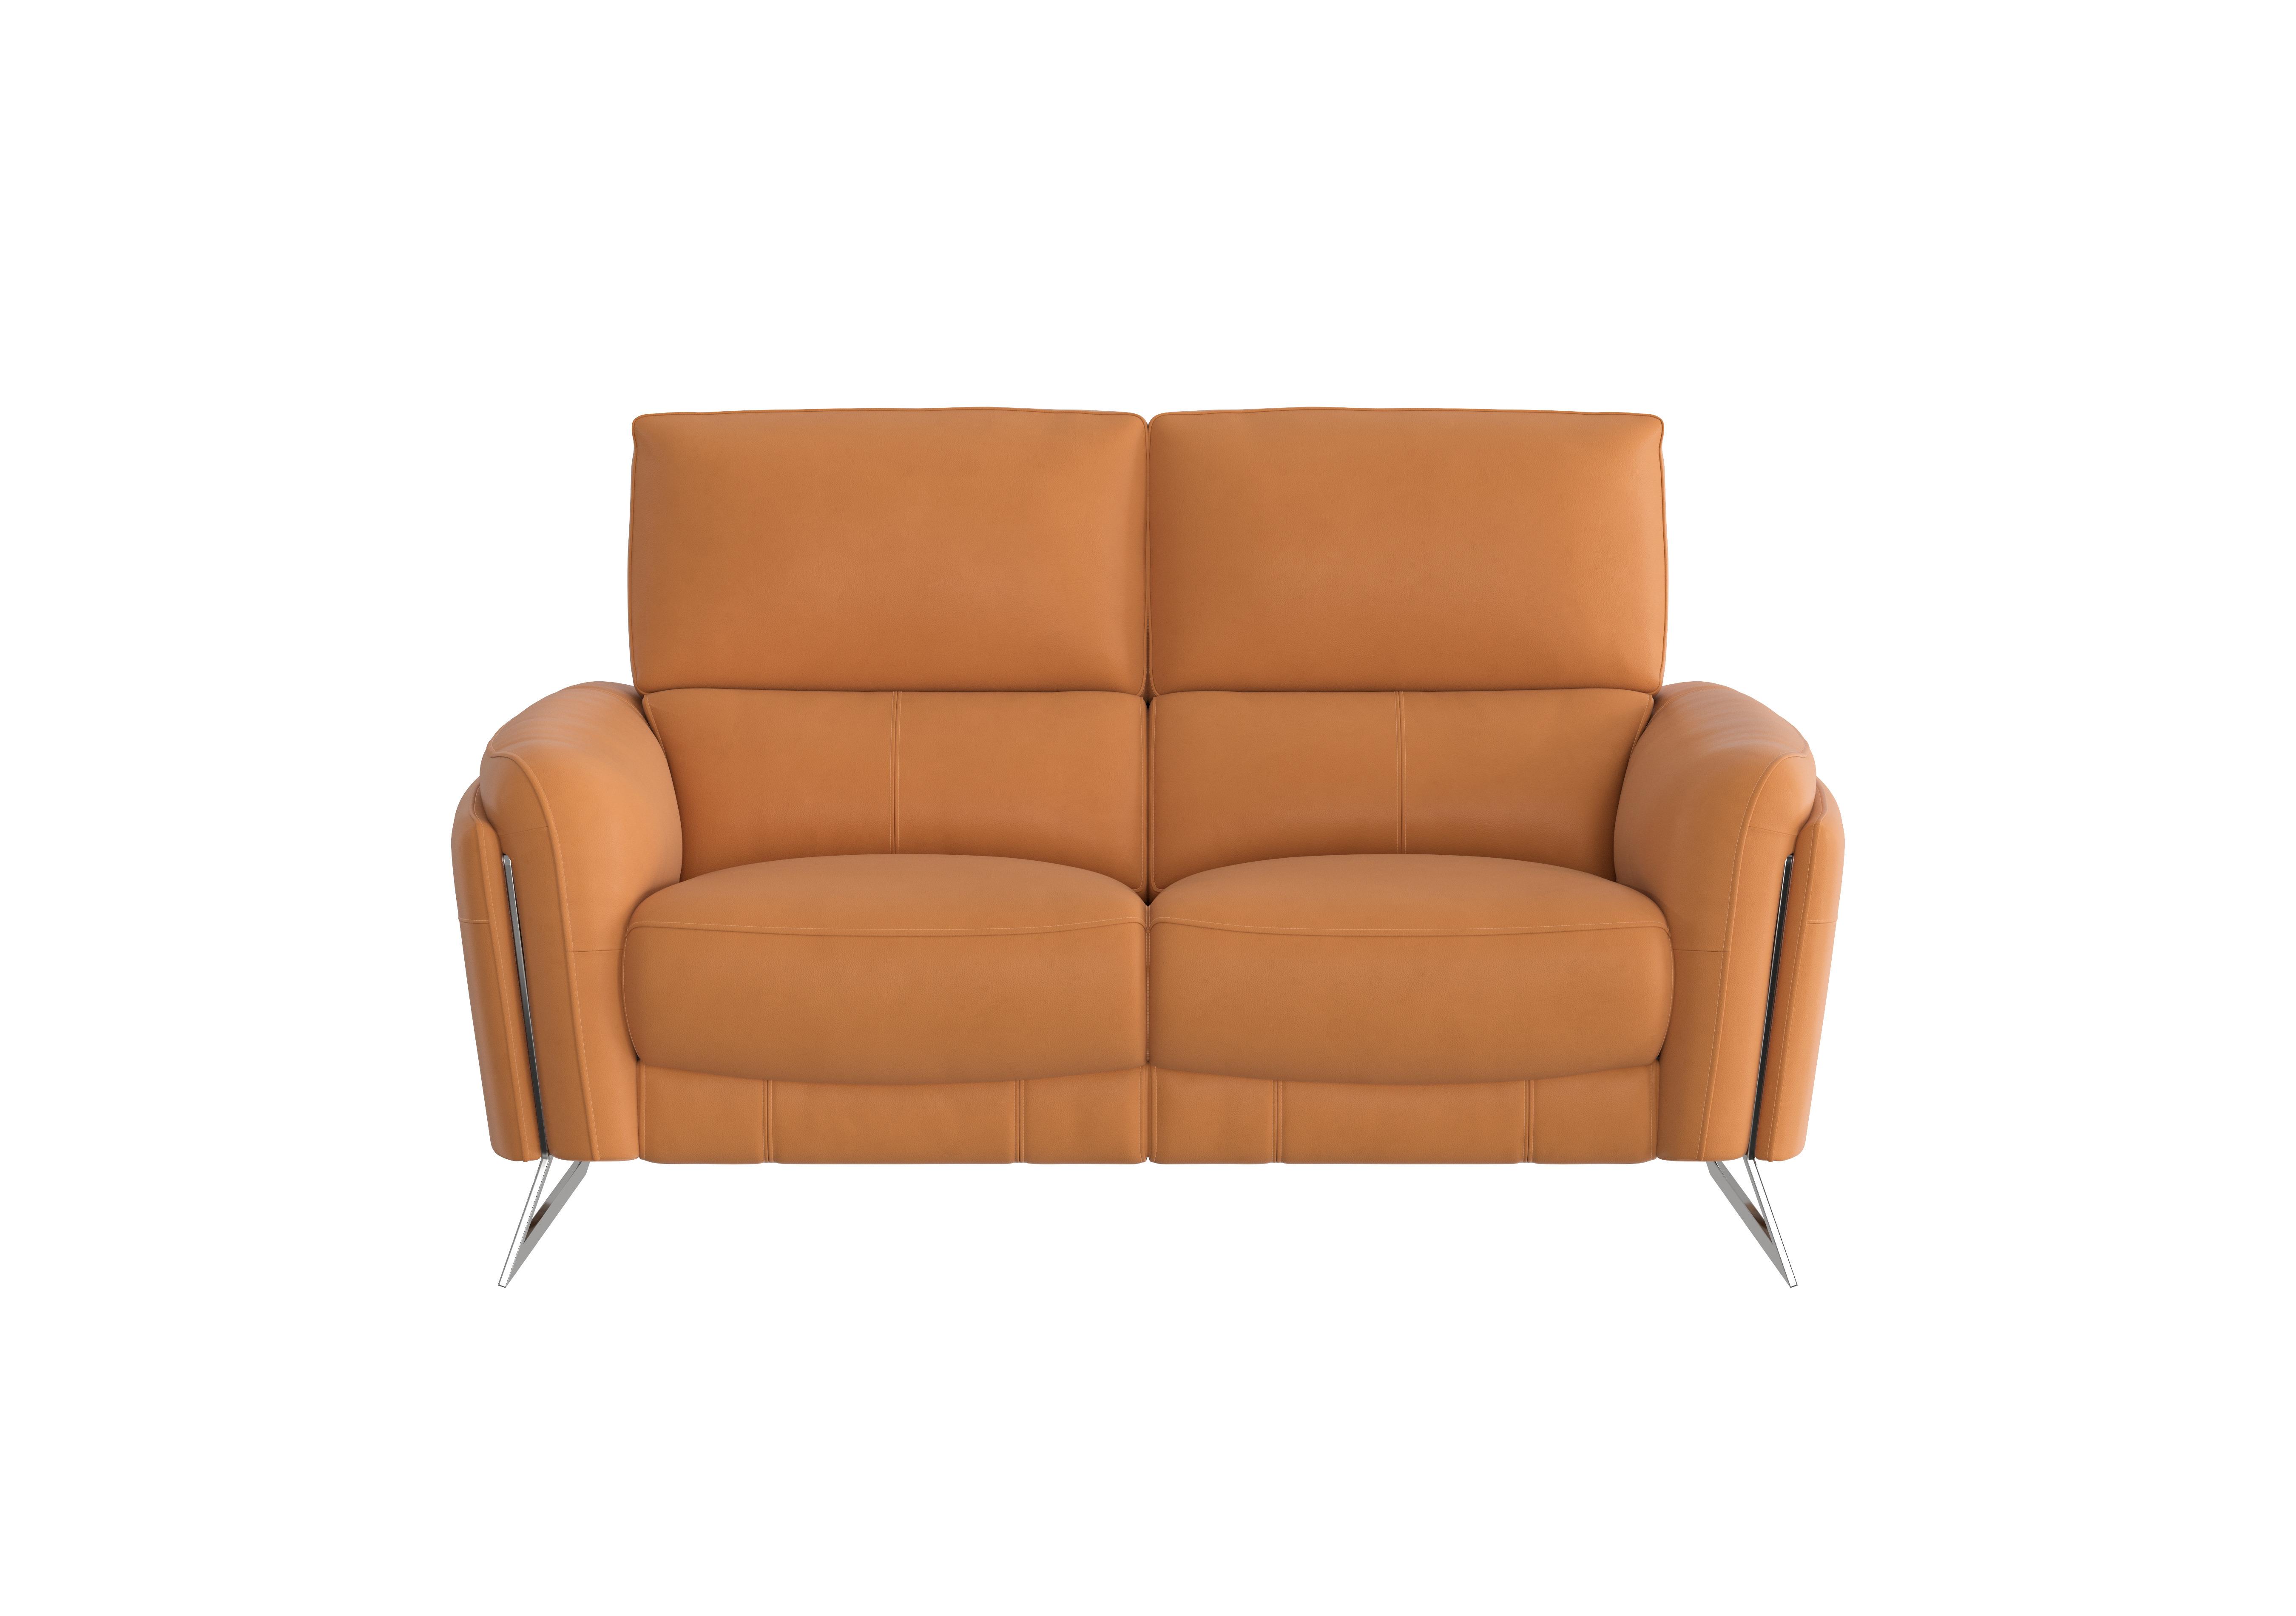 Amarilla 2 Seater Leather Sofa in Bv-335e Honey Yellow on Furniture Village